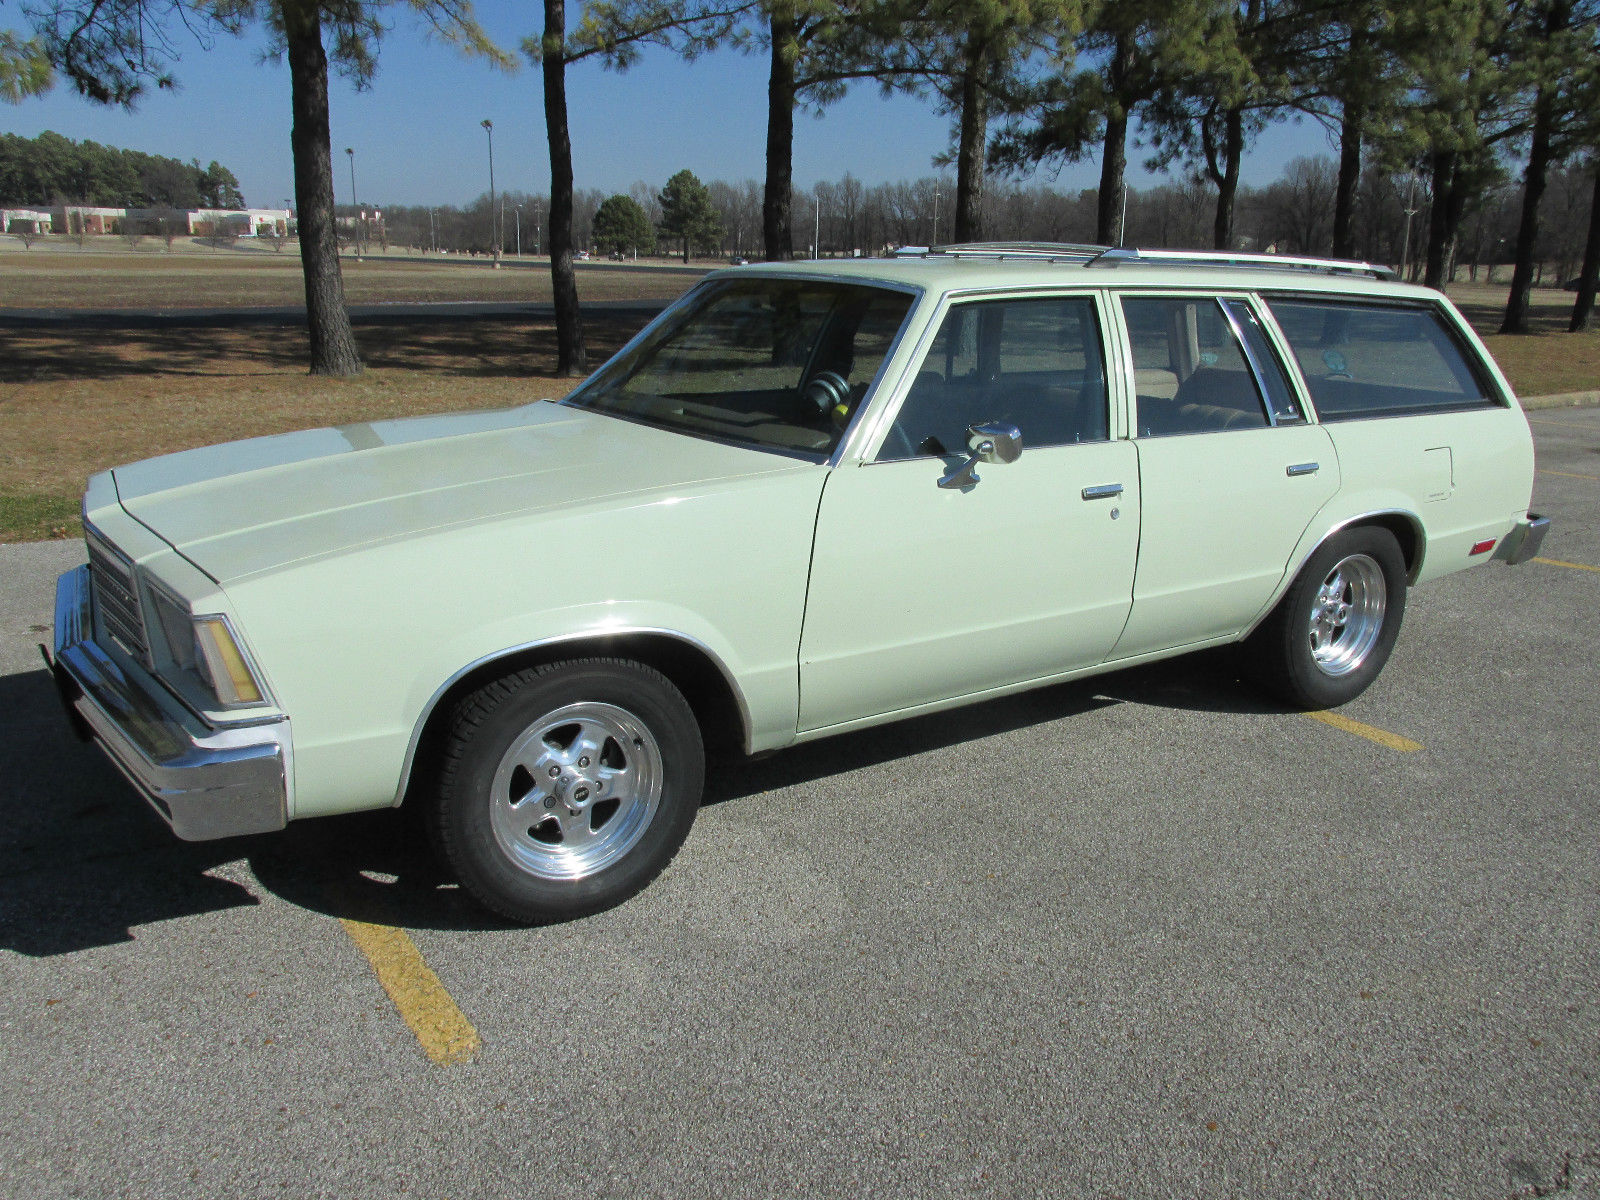 1979 Chevrolet Malibu for sale in Jonesboro, Arkansas, United States.